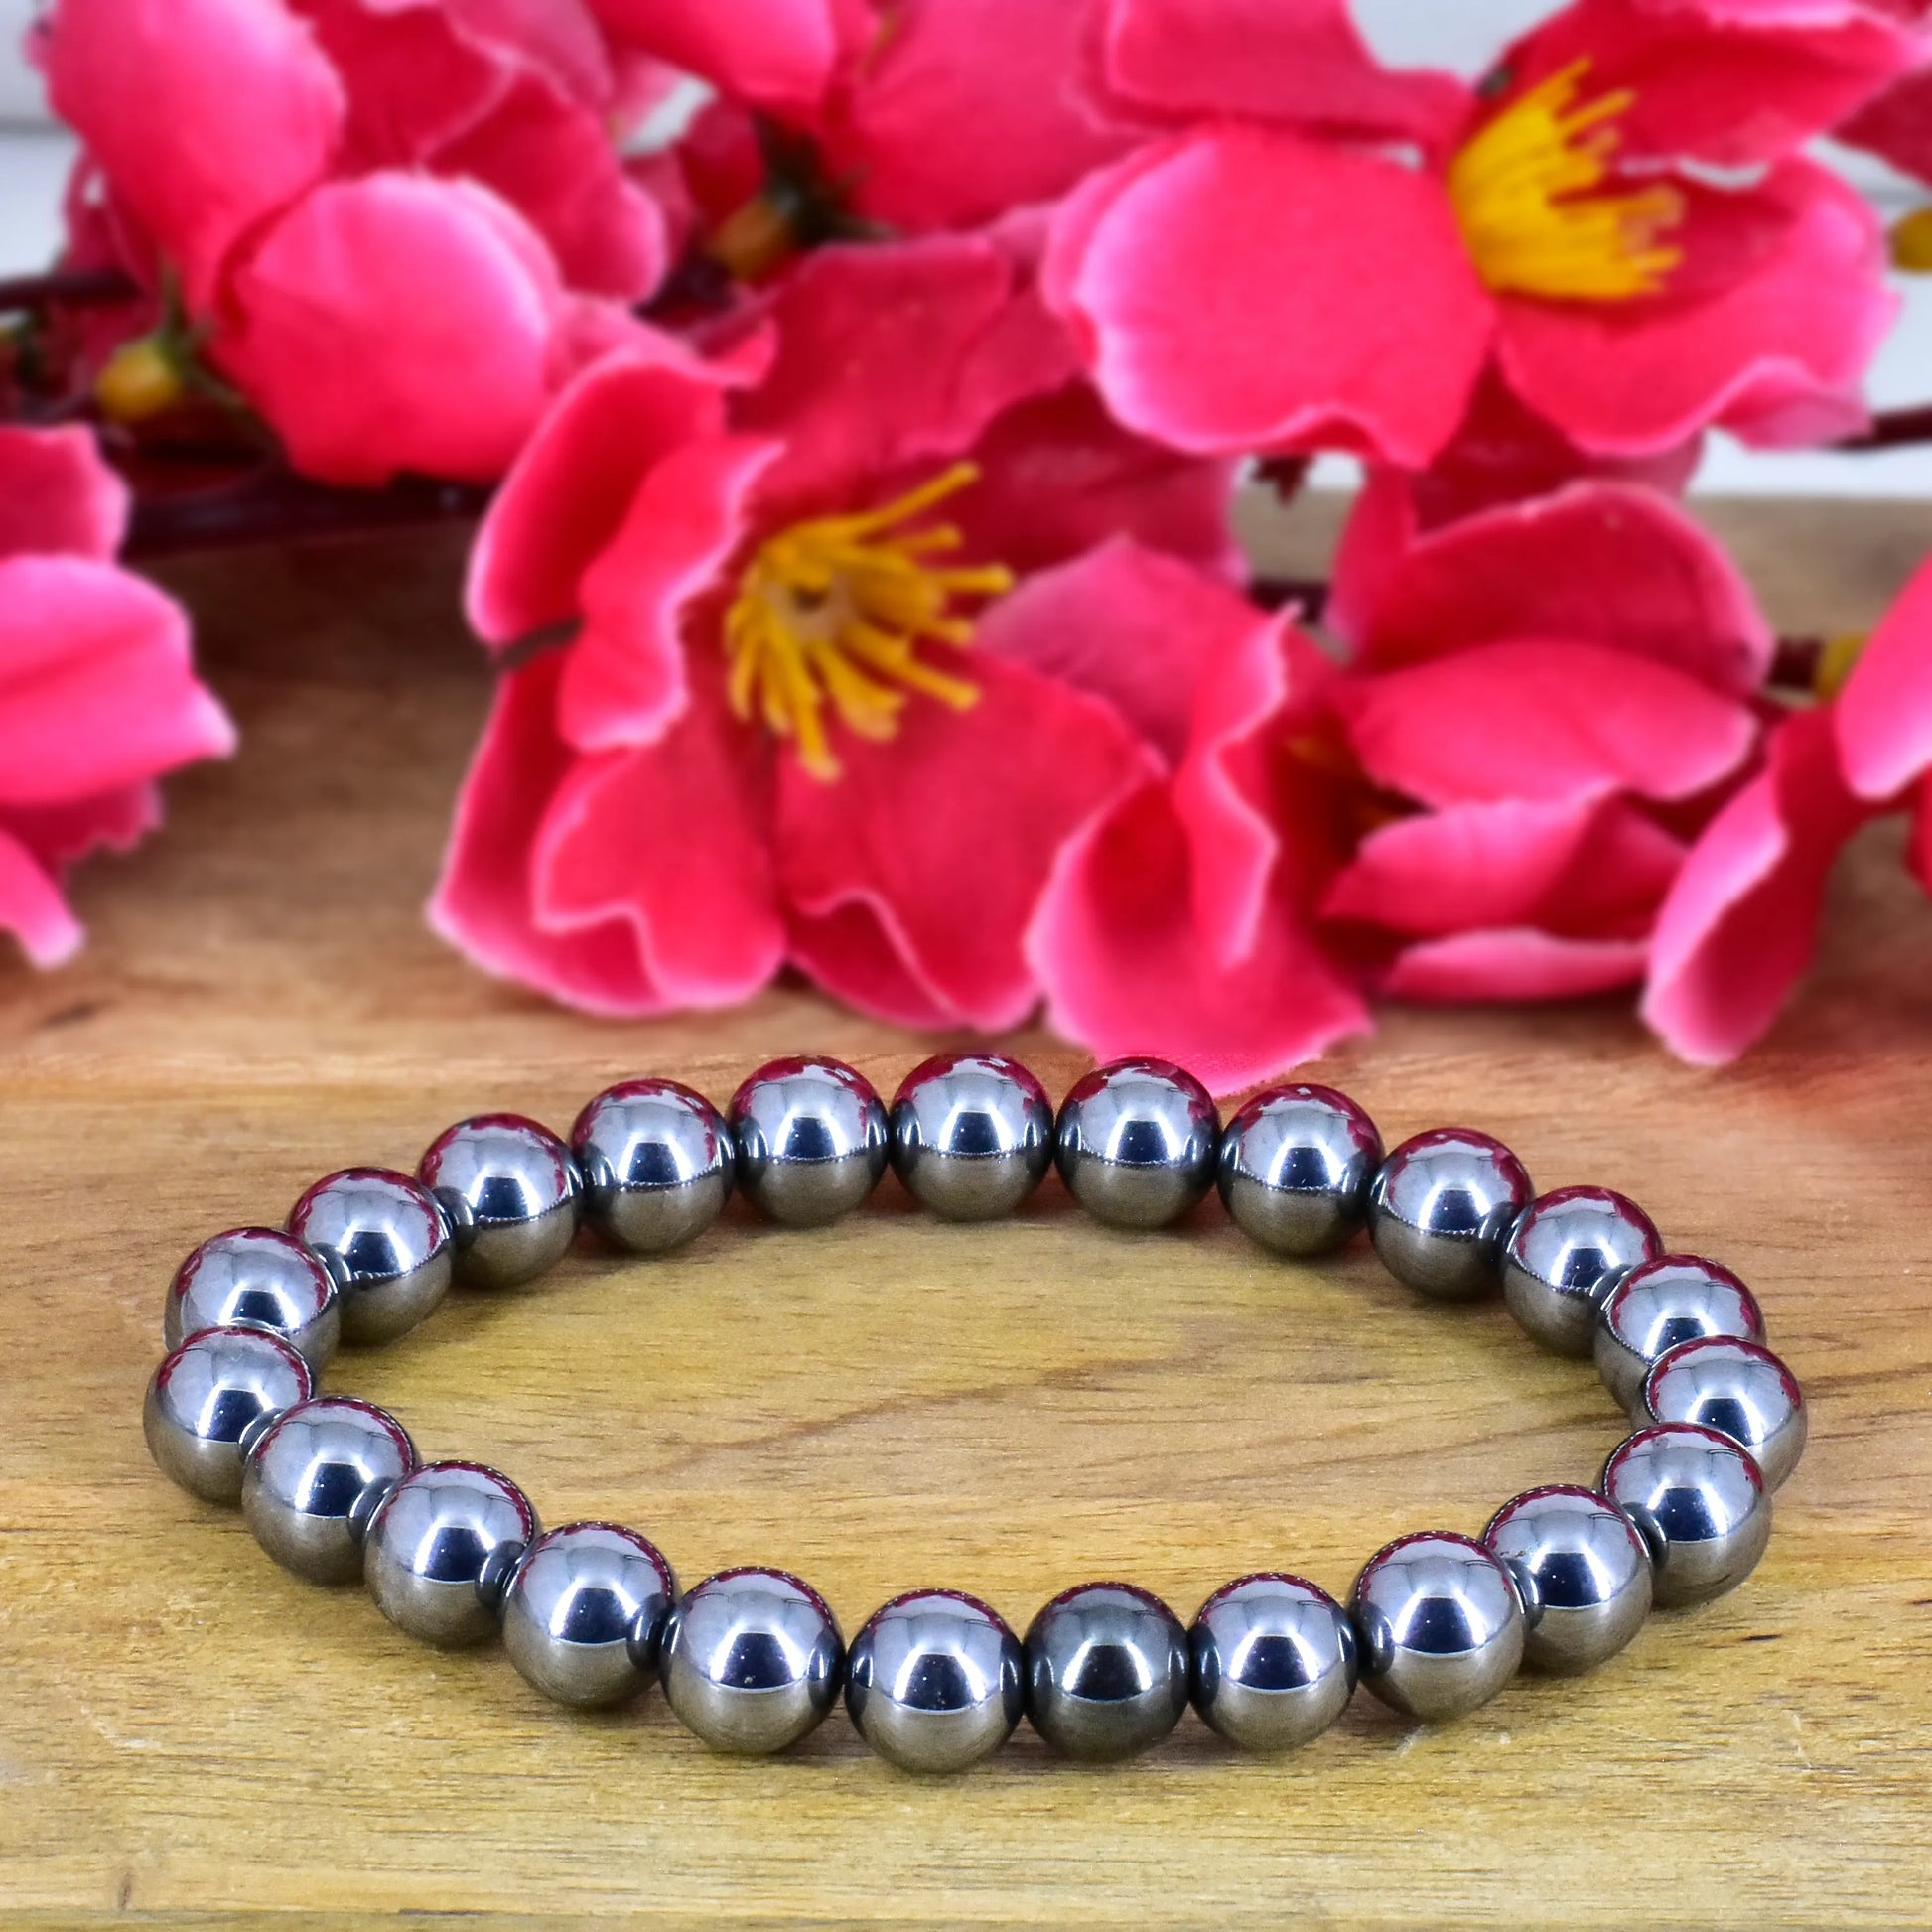 Shungite Metal Finish Crystal stone Bracelet for Reiki Healing